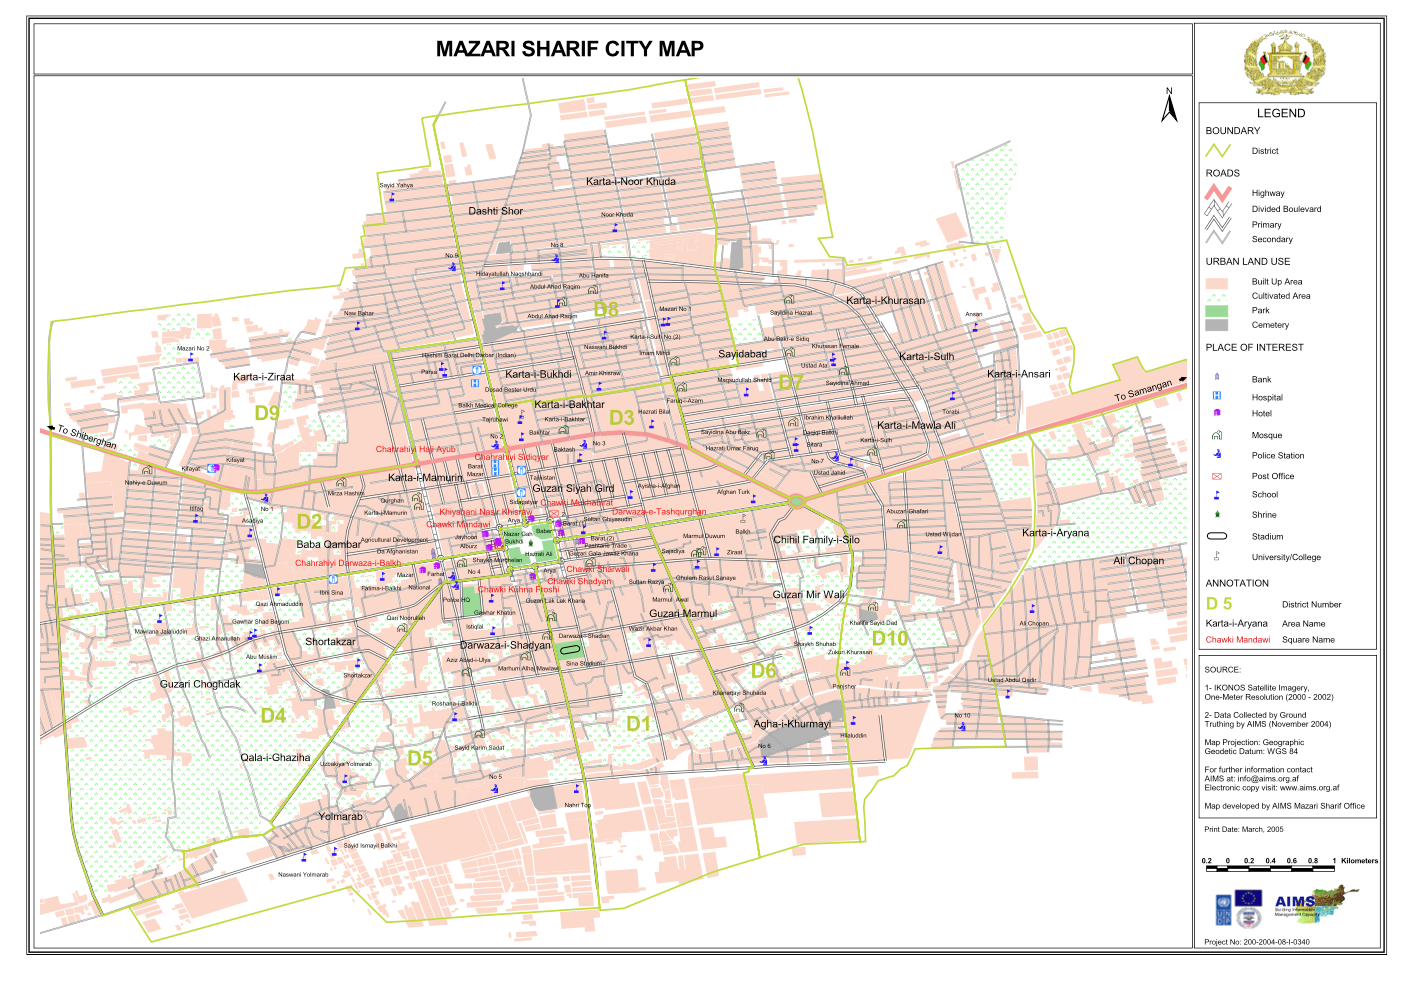 Mazar-e-Sharif City Map